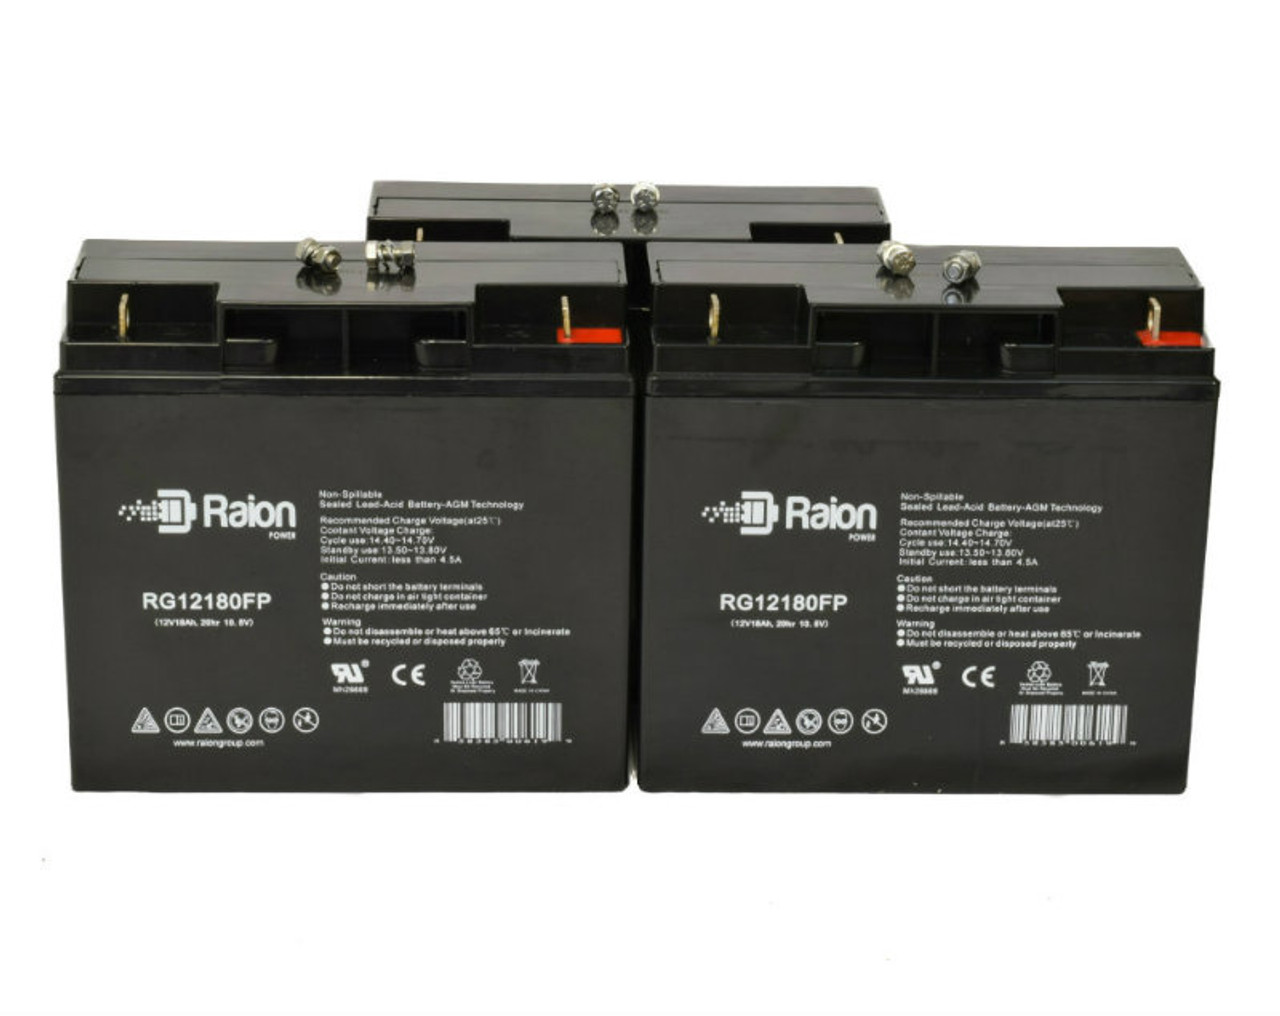 Raion Power Replacement 12V 18Ah Battery for Best Battery SLA12180 - 3 Pack